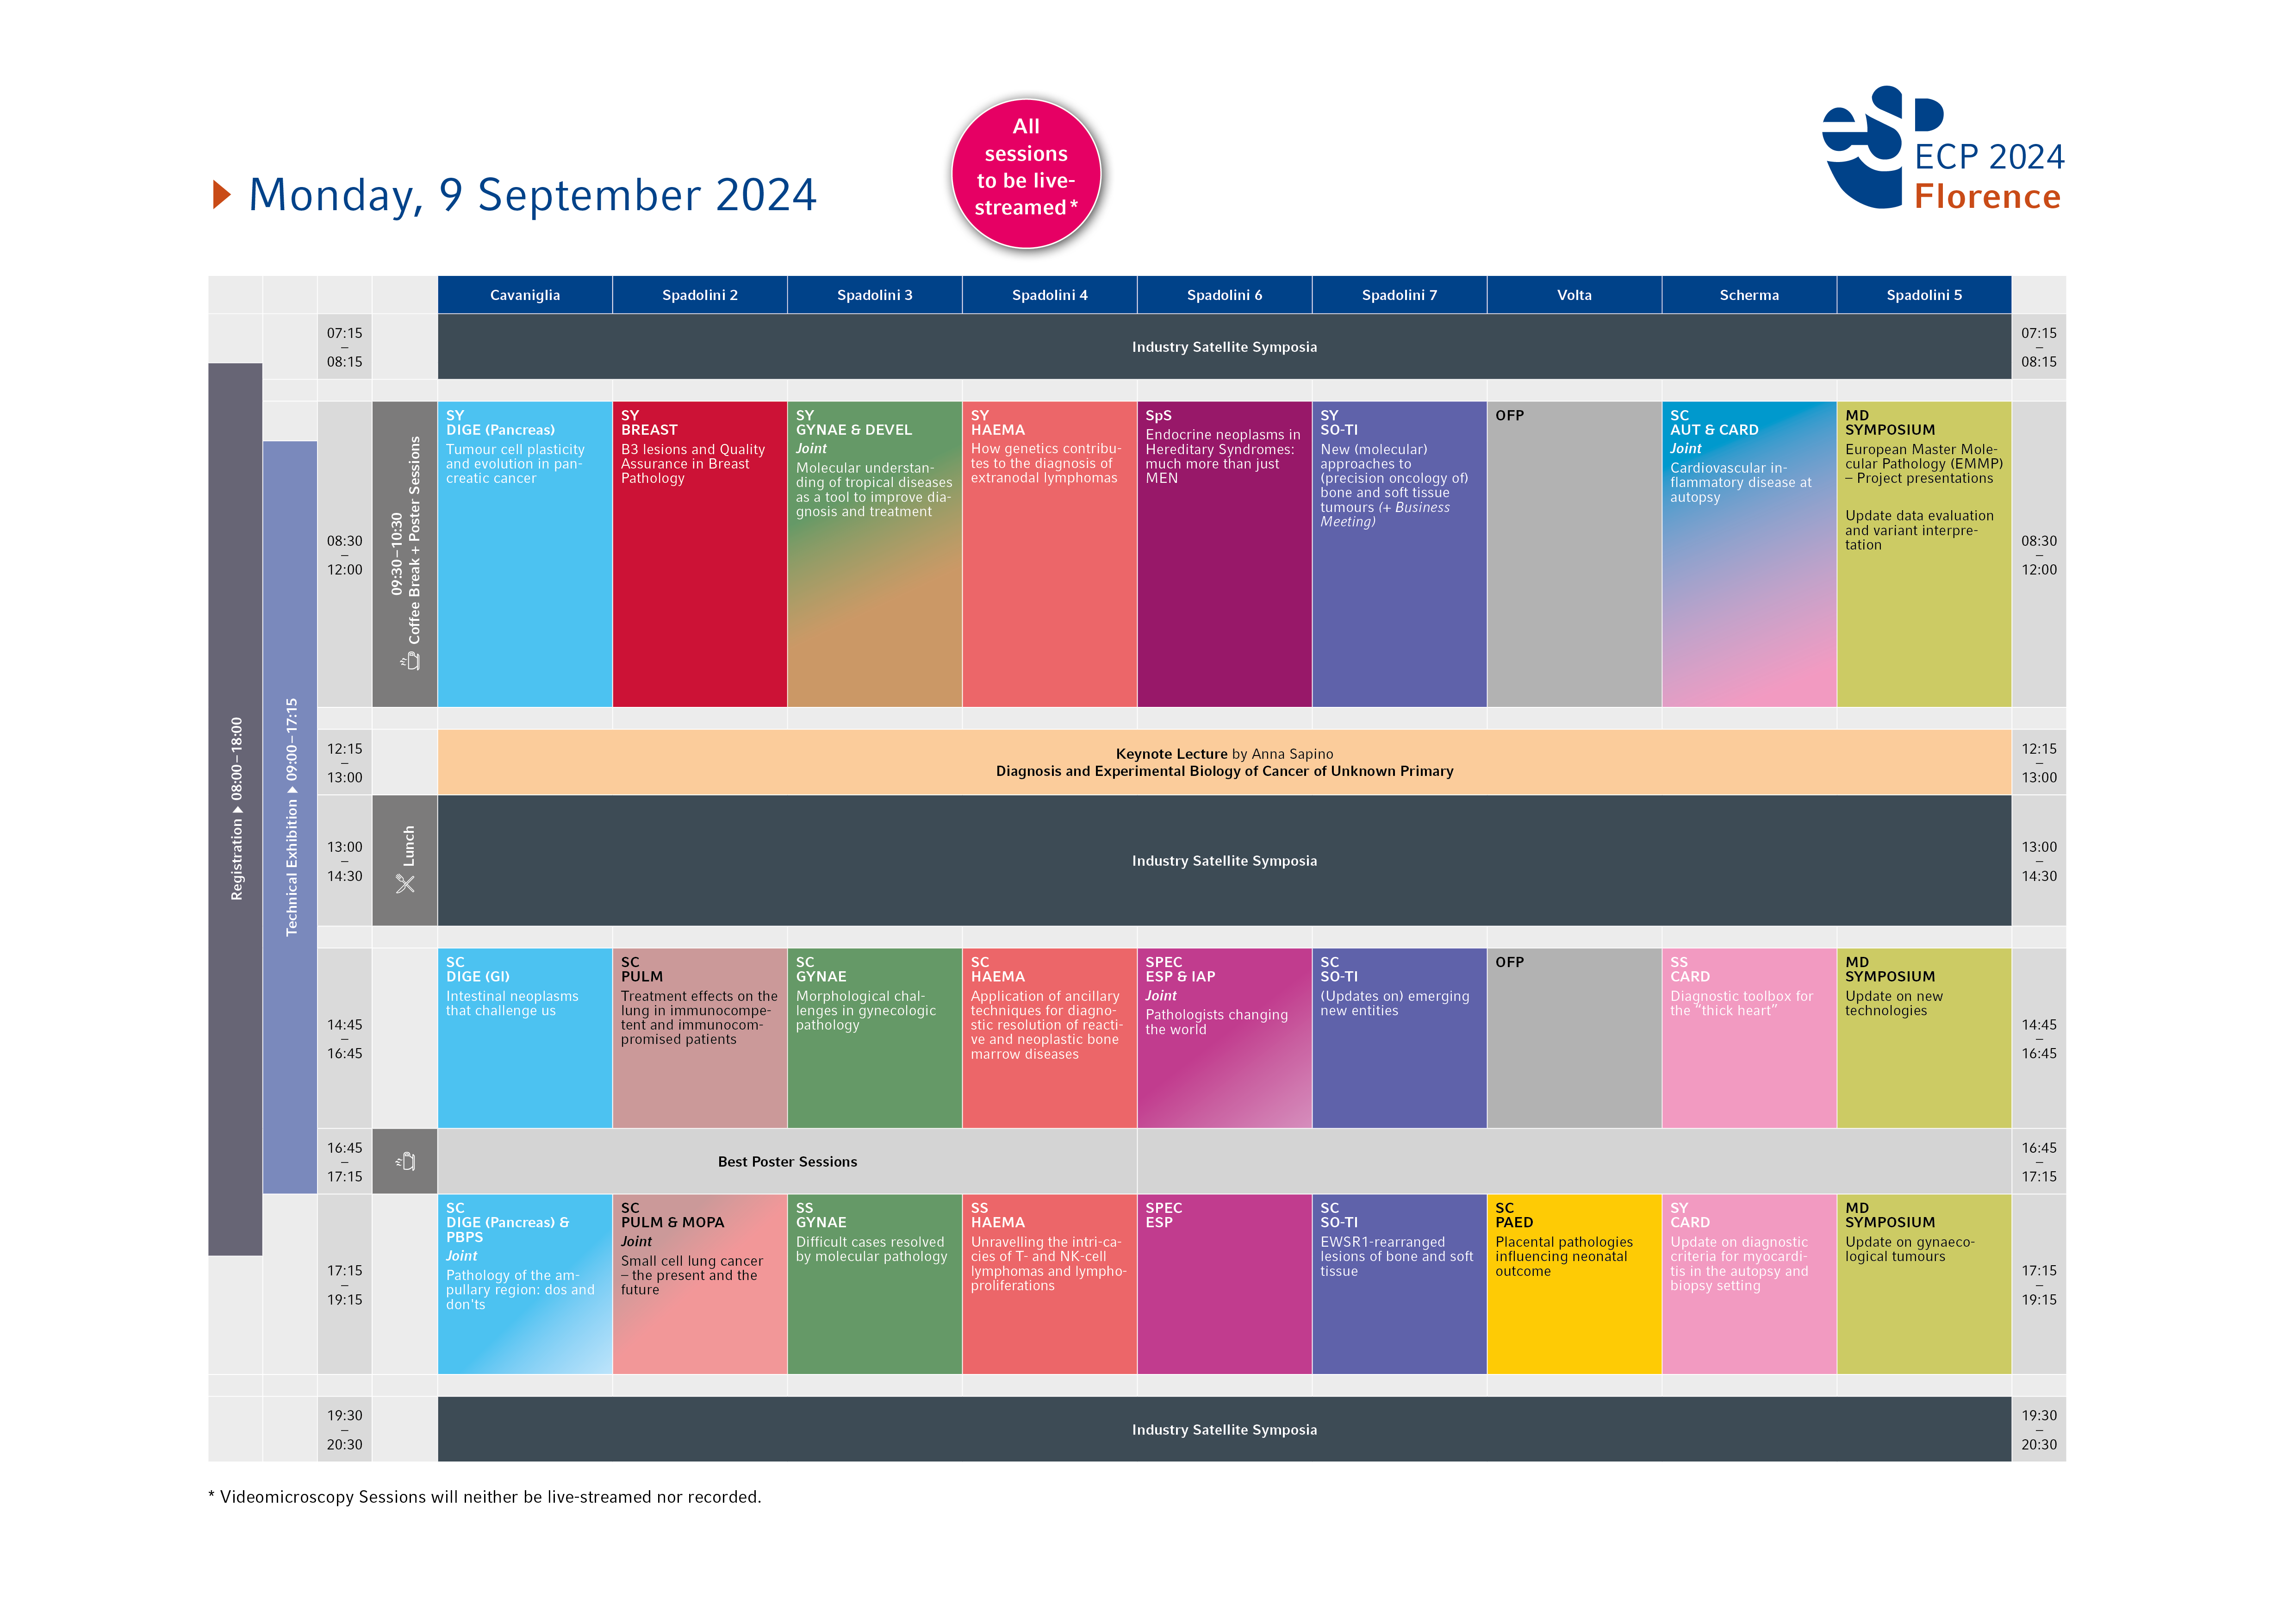 Programme Schedule - Monday, 9 September 2024